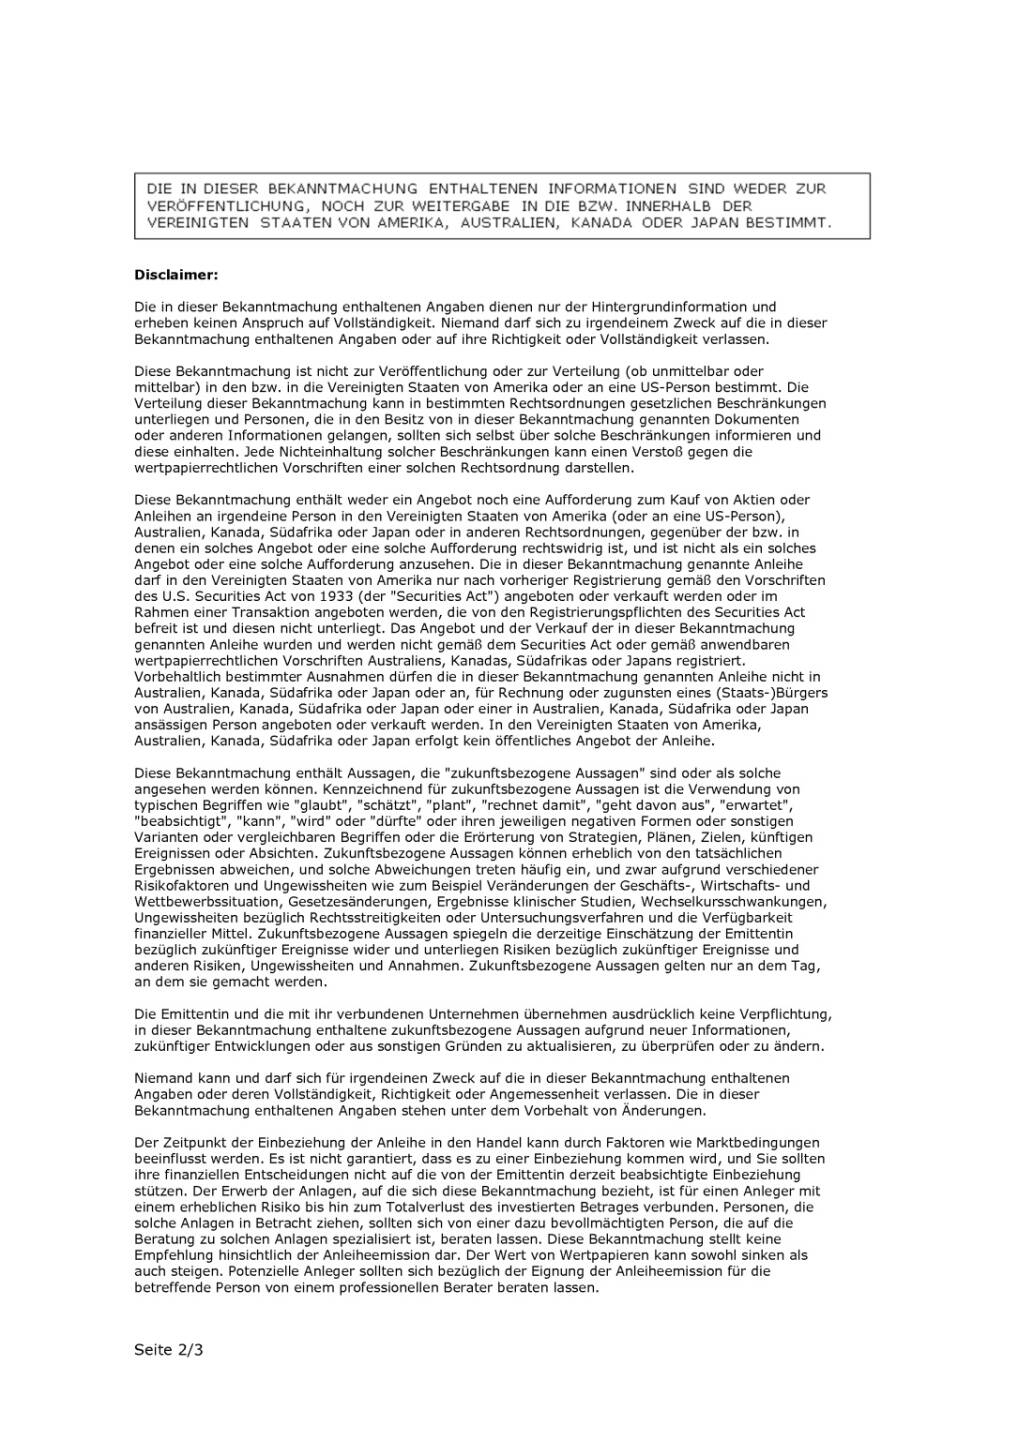 Fresenius: Wandlungspreis der Wandelanleihe festgesetzt, Seite 2/3, komplettes Dokument unter http://boerse-social.com/static/uploads/file_2093_fresenius_wandlungspreis_der_wandelanleihe_festgesetzt.pdf